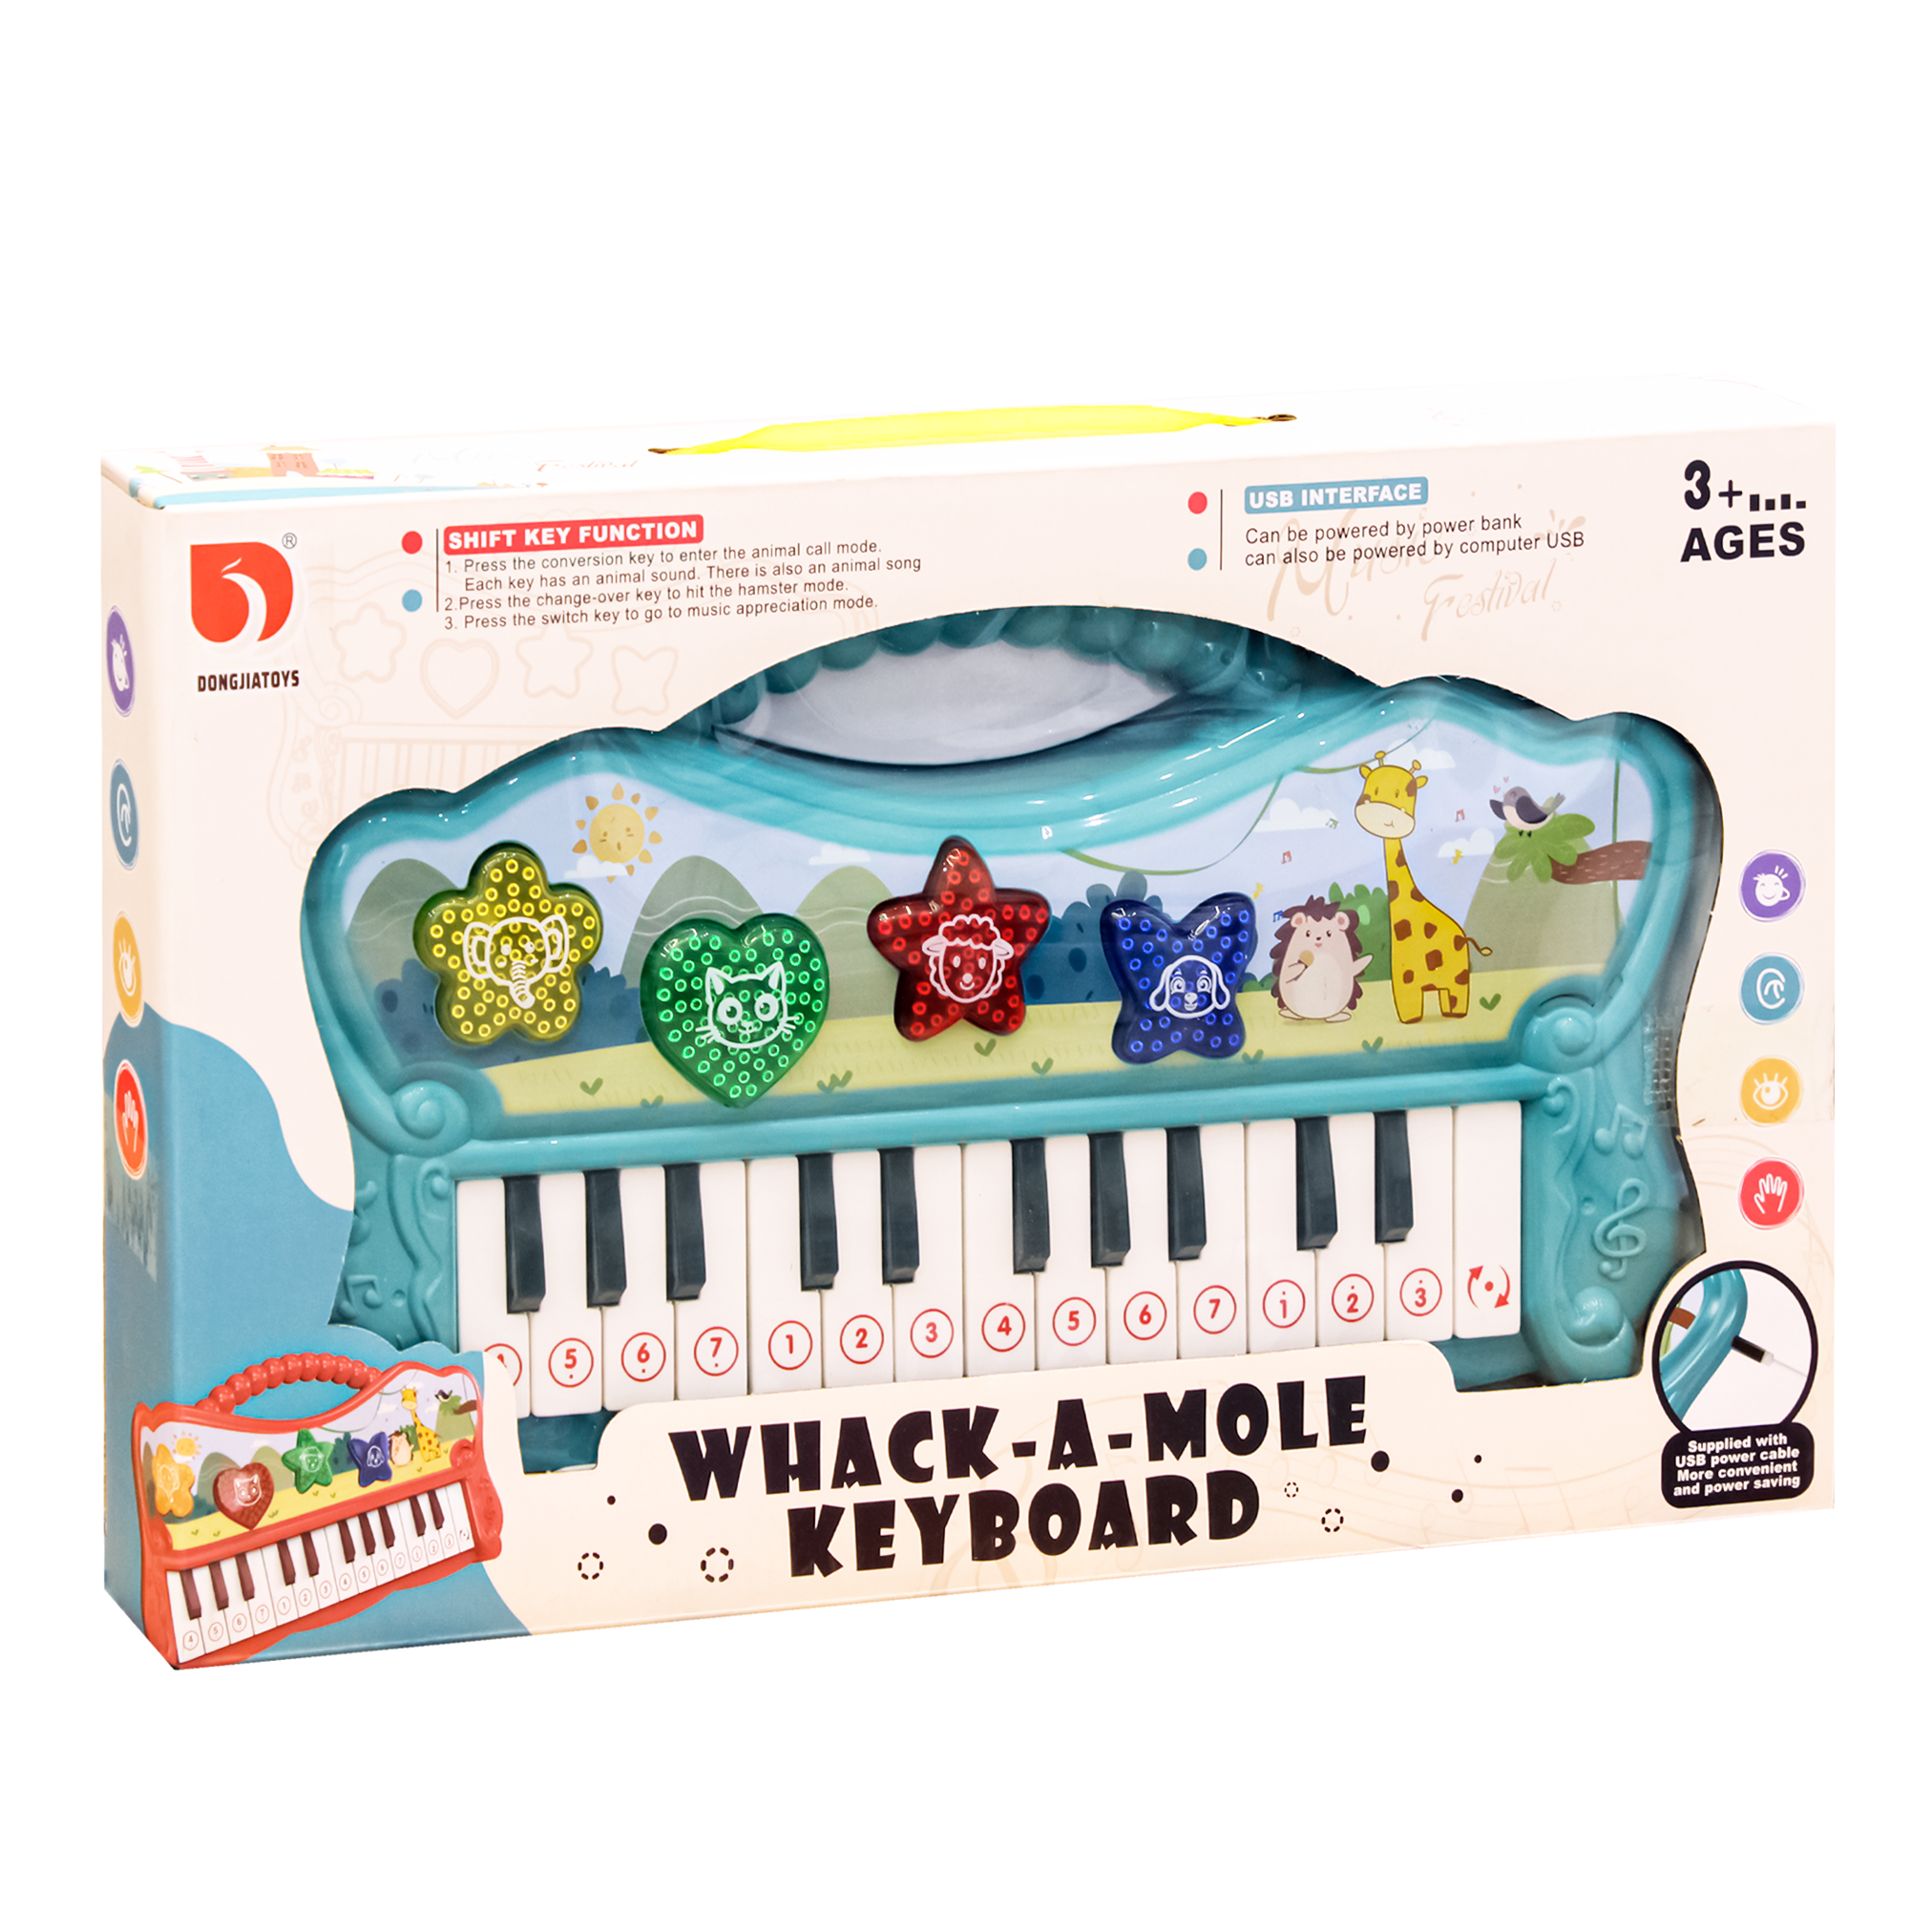 WHACK-A-MOLE KEYBOARD/PIANO FOR KIDS - Blue